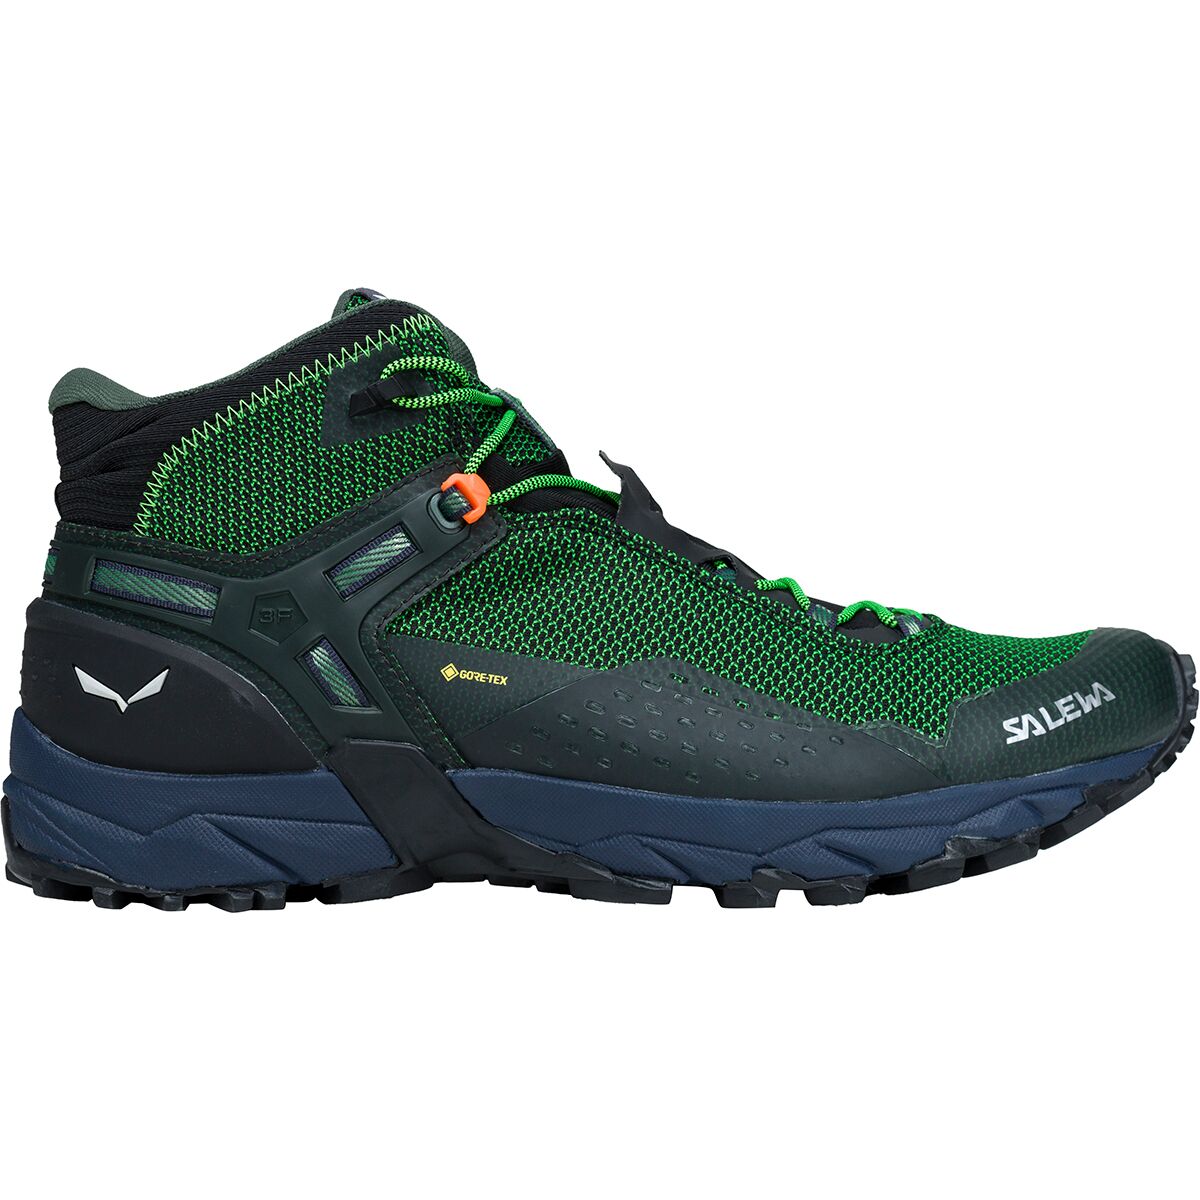 Ultra Flex 2 Mid GTX Hiking Boot - Men